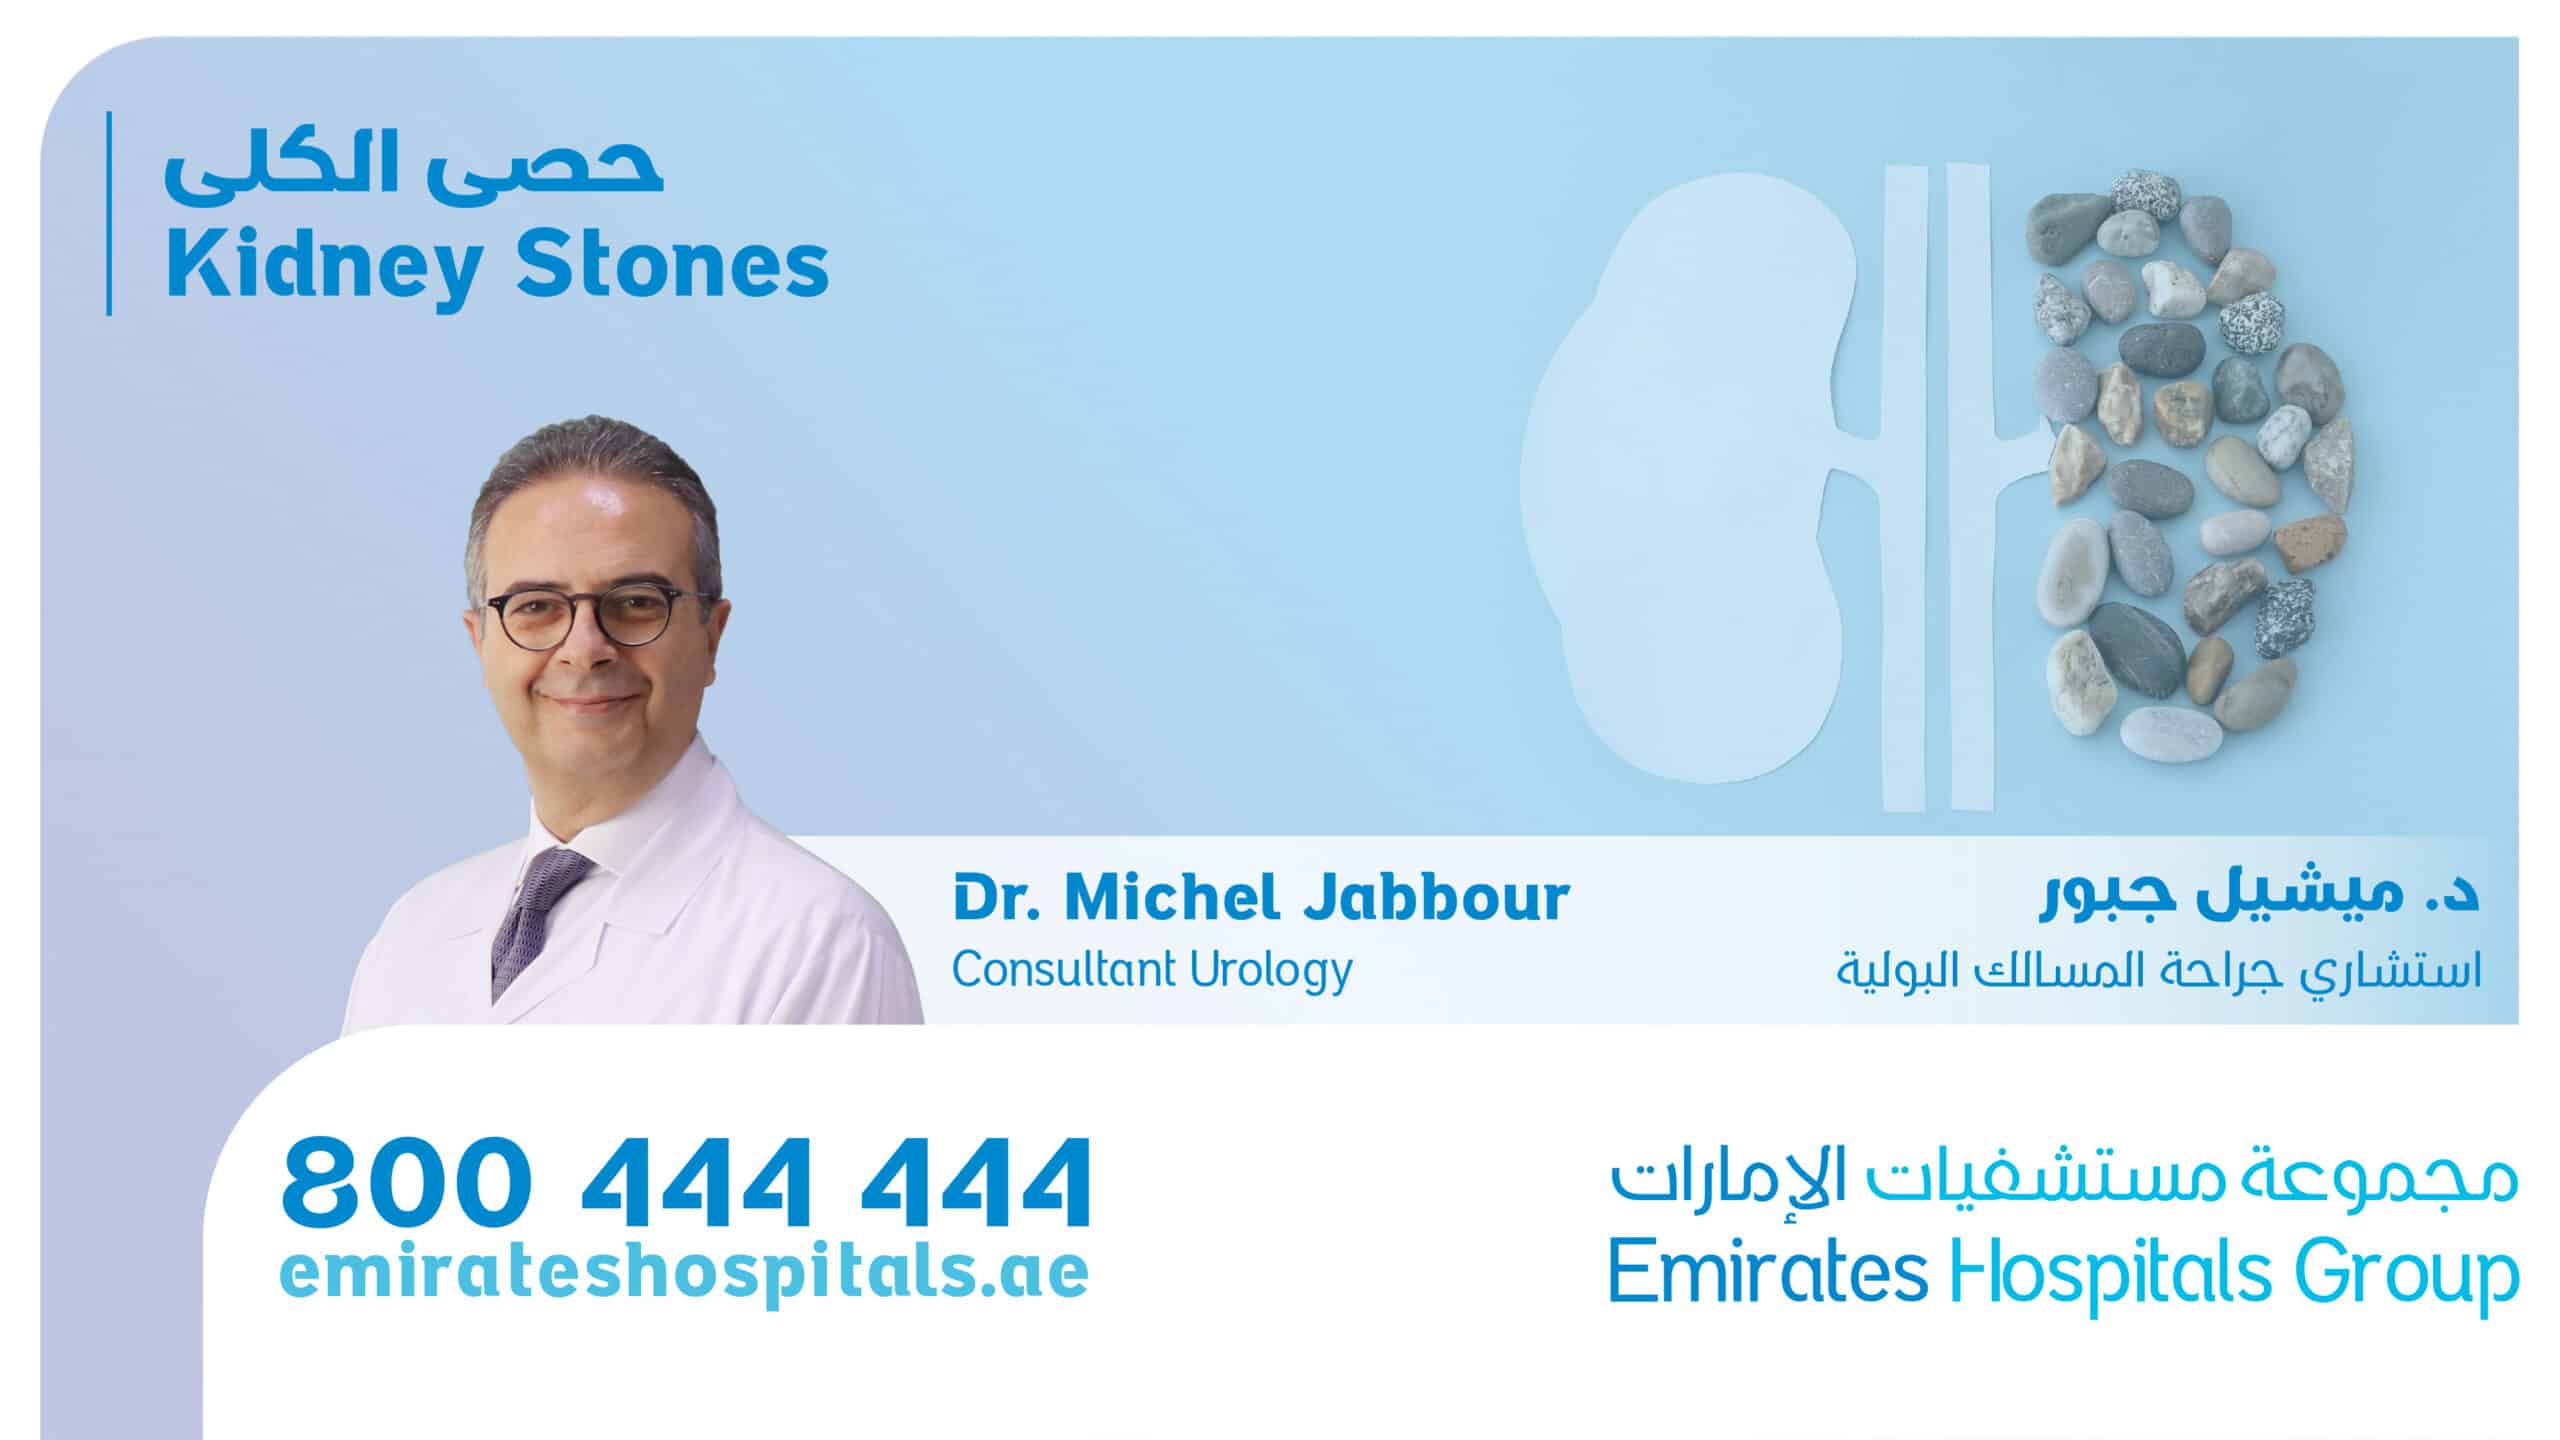 Kidney Stones - Dr. Michel Jabbour , Consultant Urology